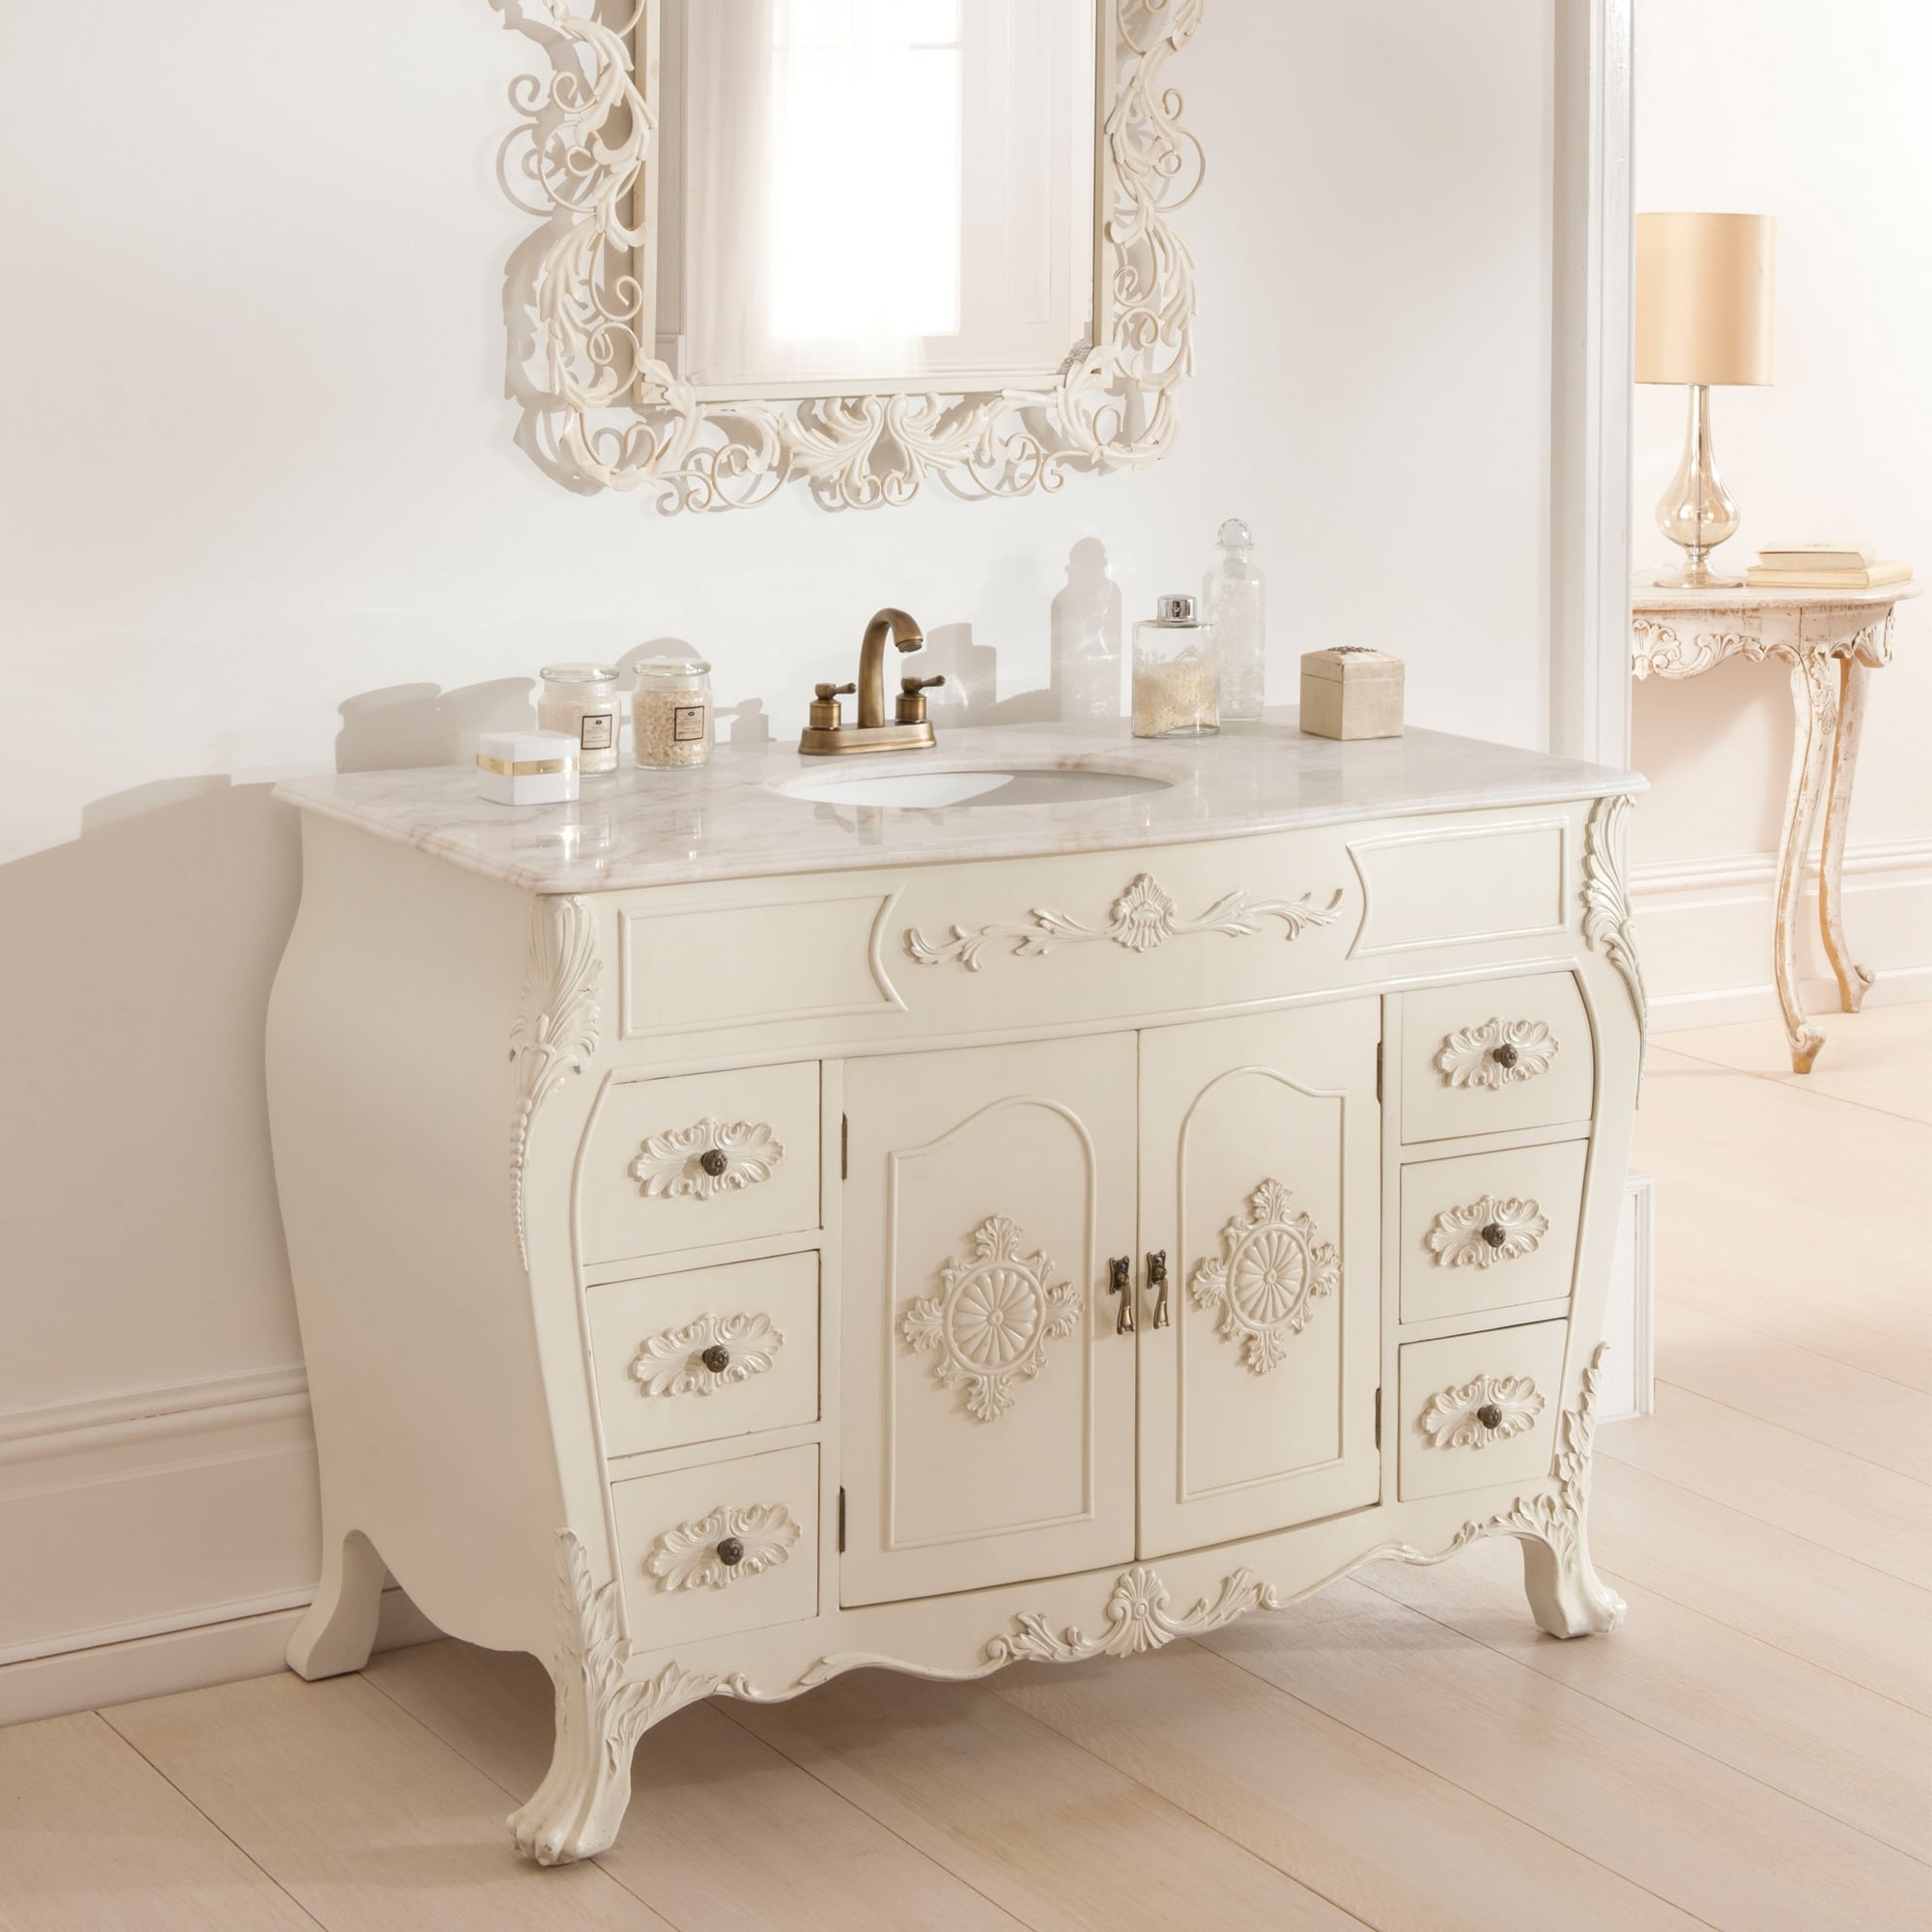 Antique French Vanity Unit Shab Chic Bathroom Furniture within sizing 2000 X 2000